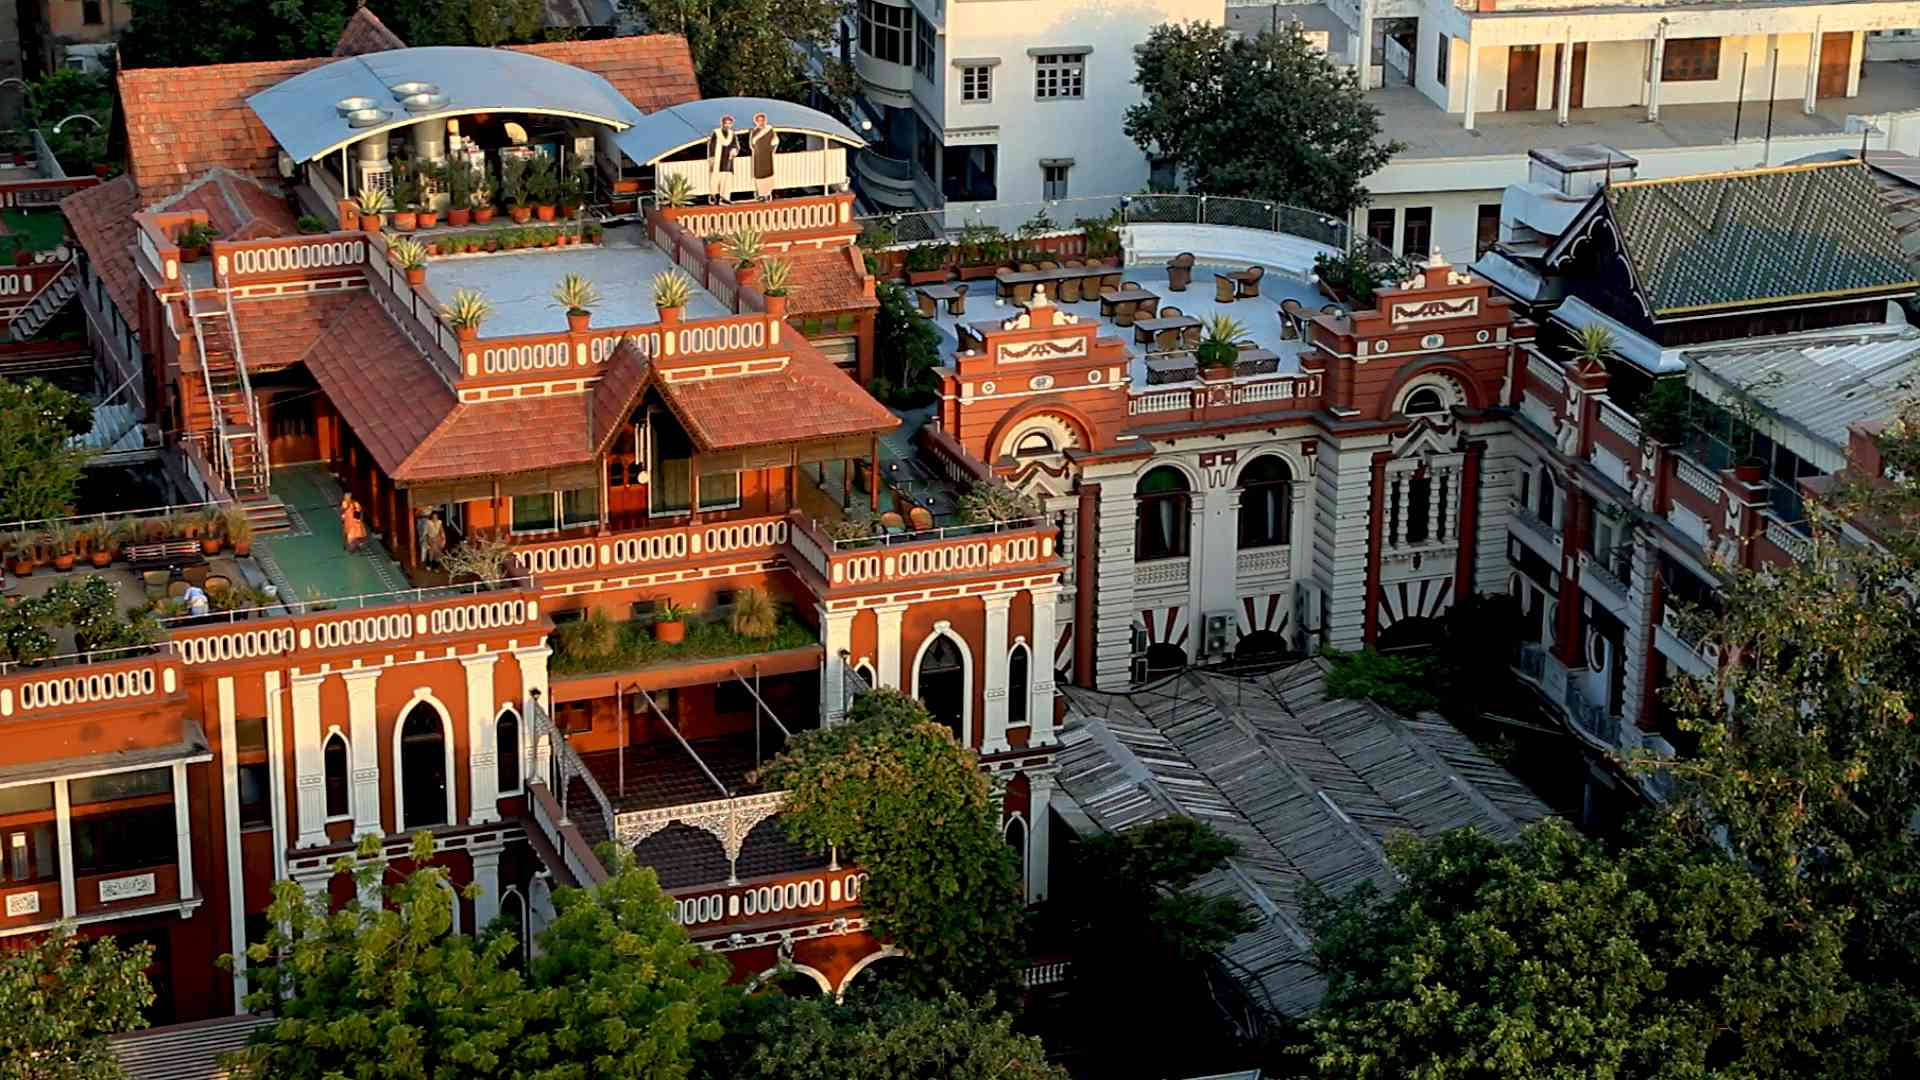 Ahmedabad The House Of MG Wallpaper